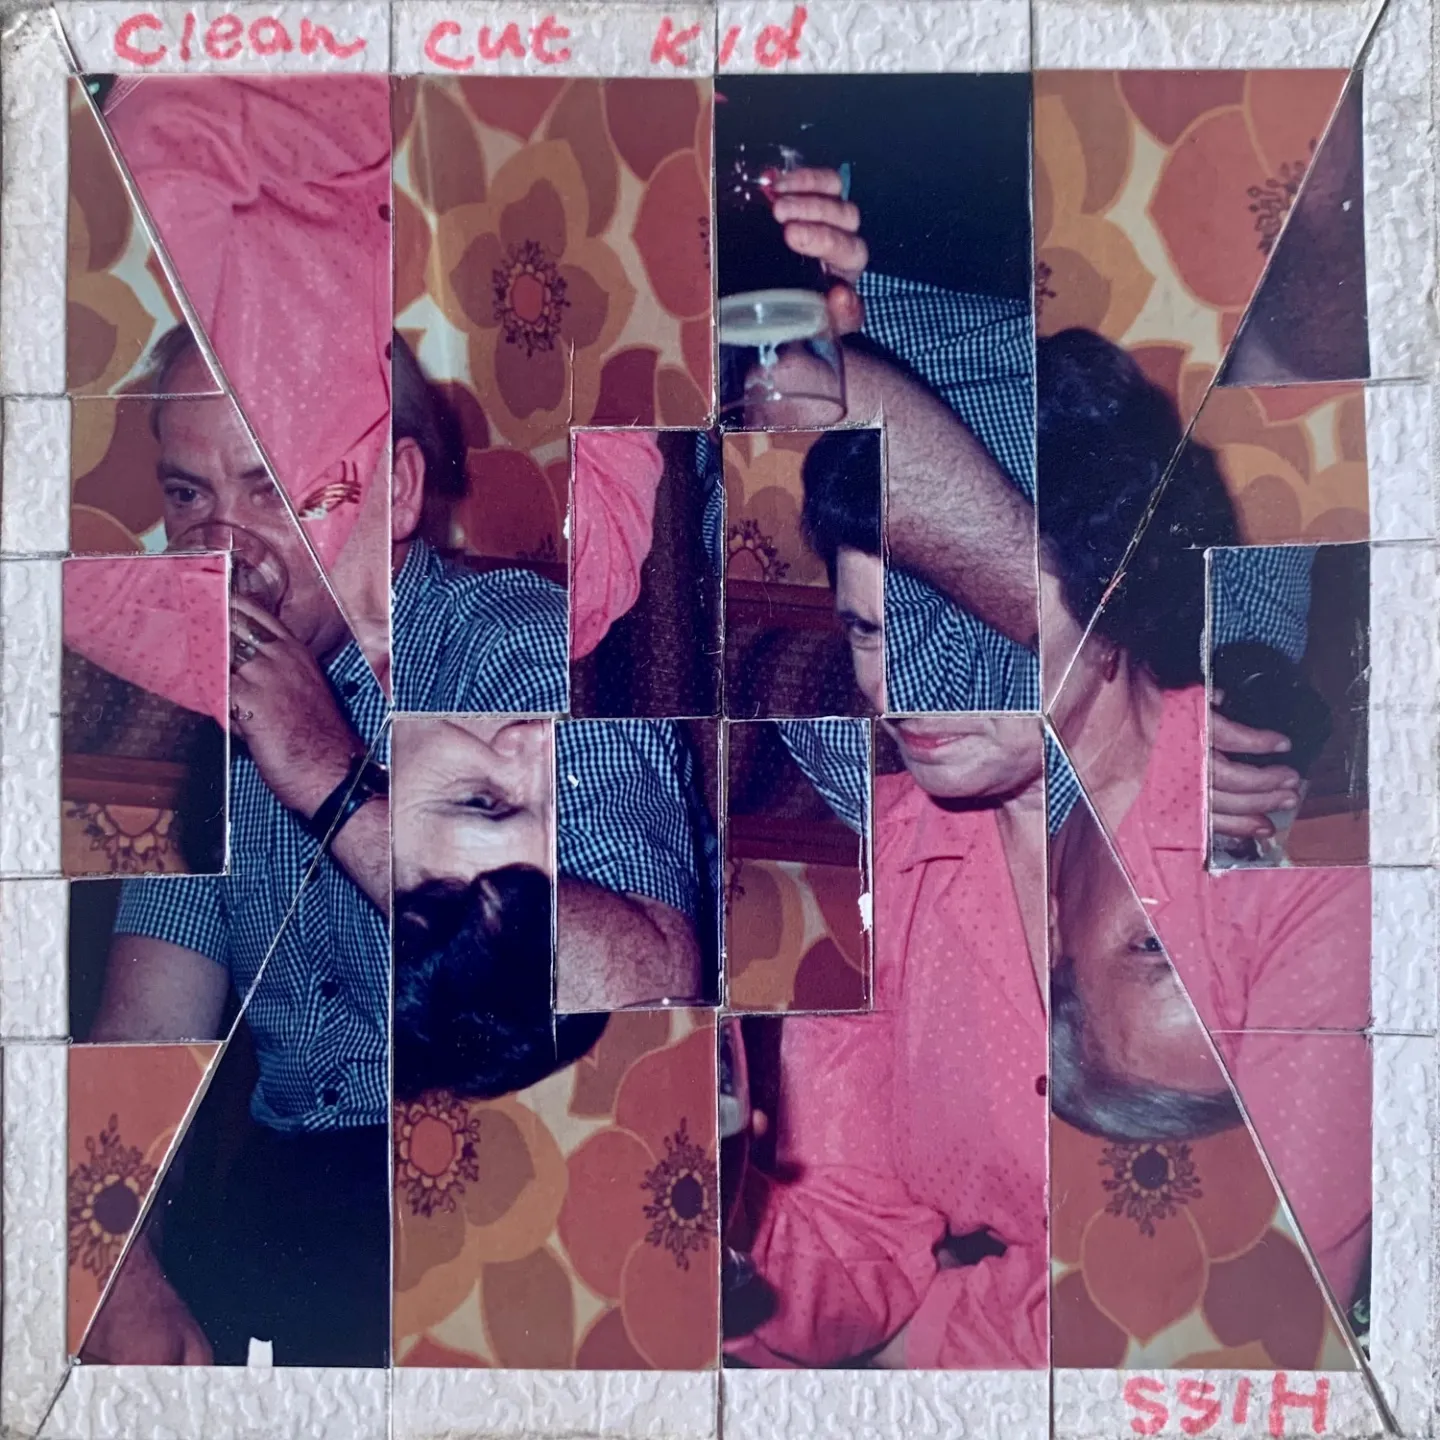 <strong>Clean Cut Kid - Hiss</strong> (Vinyl LP - black)